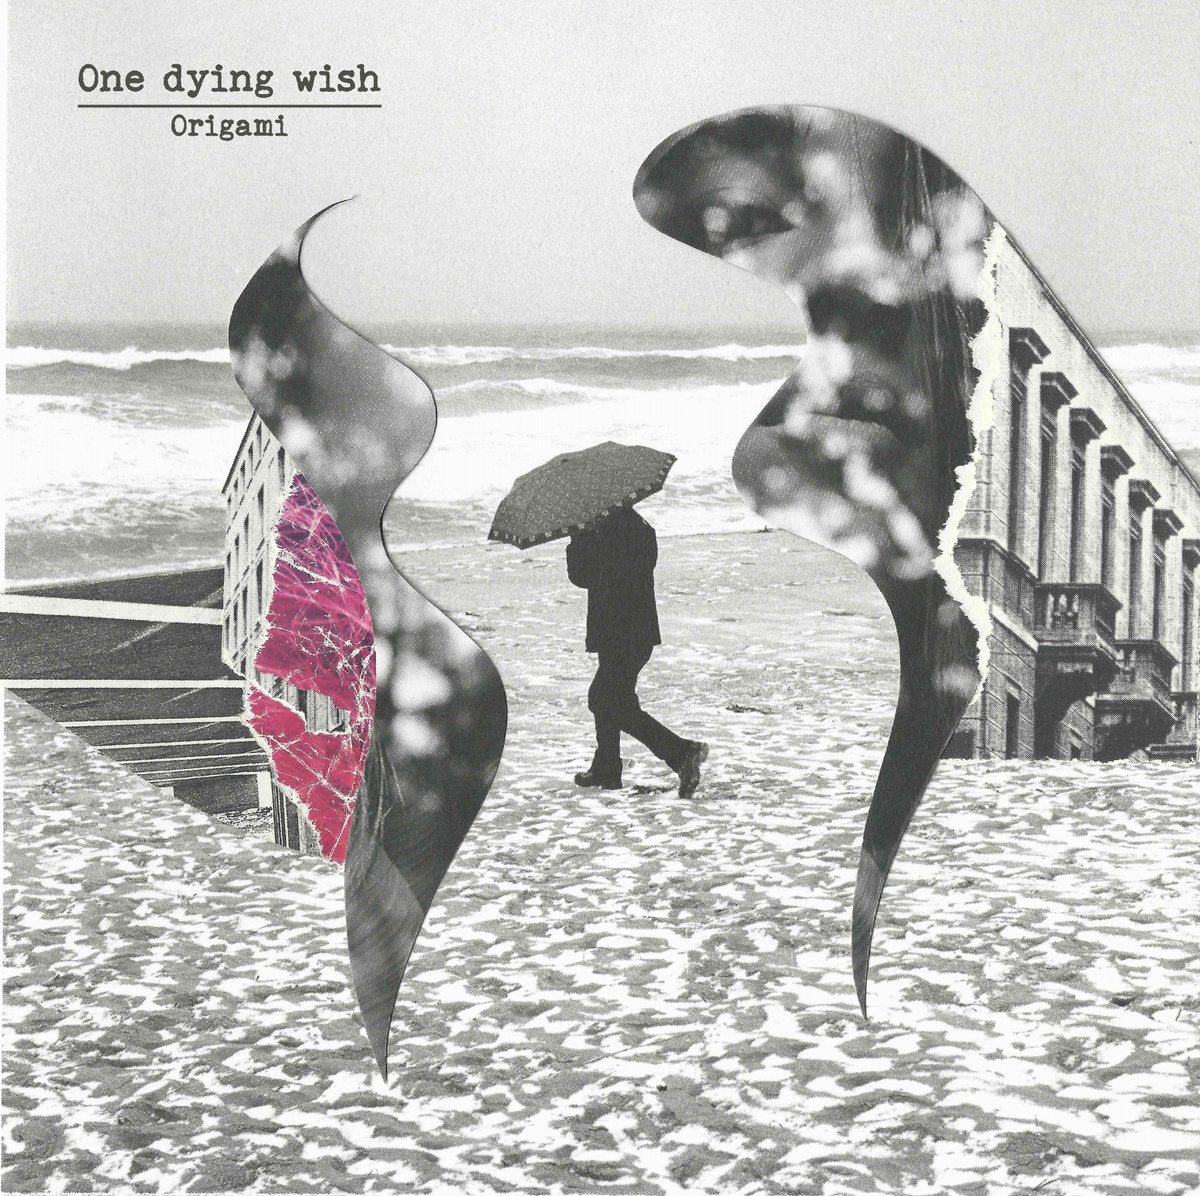 One Dying Wish - Origami [Vinyl]